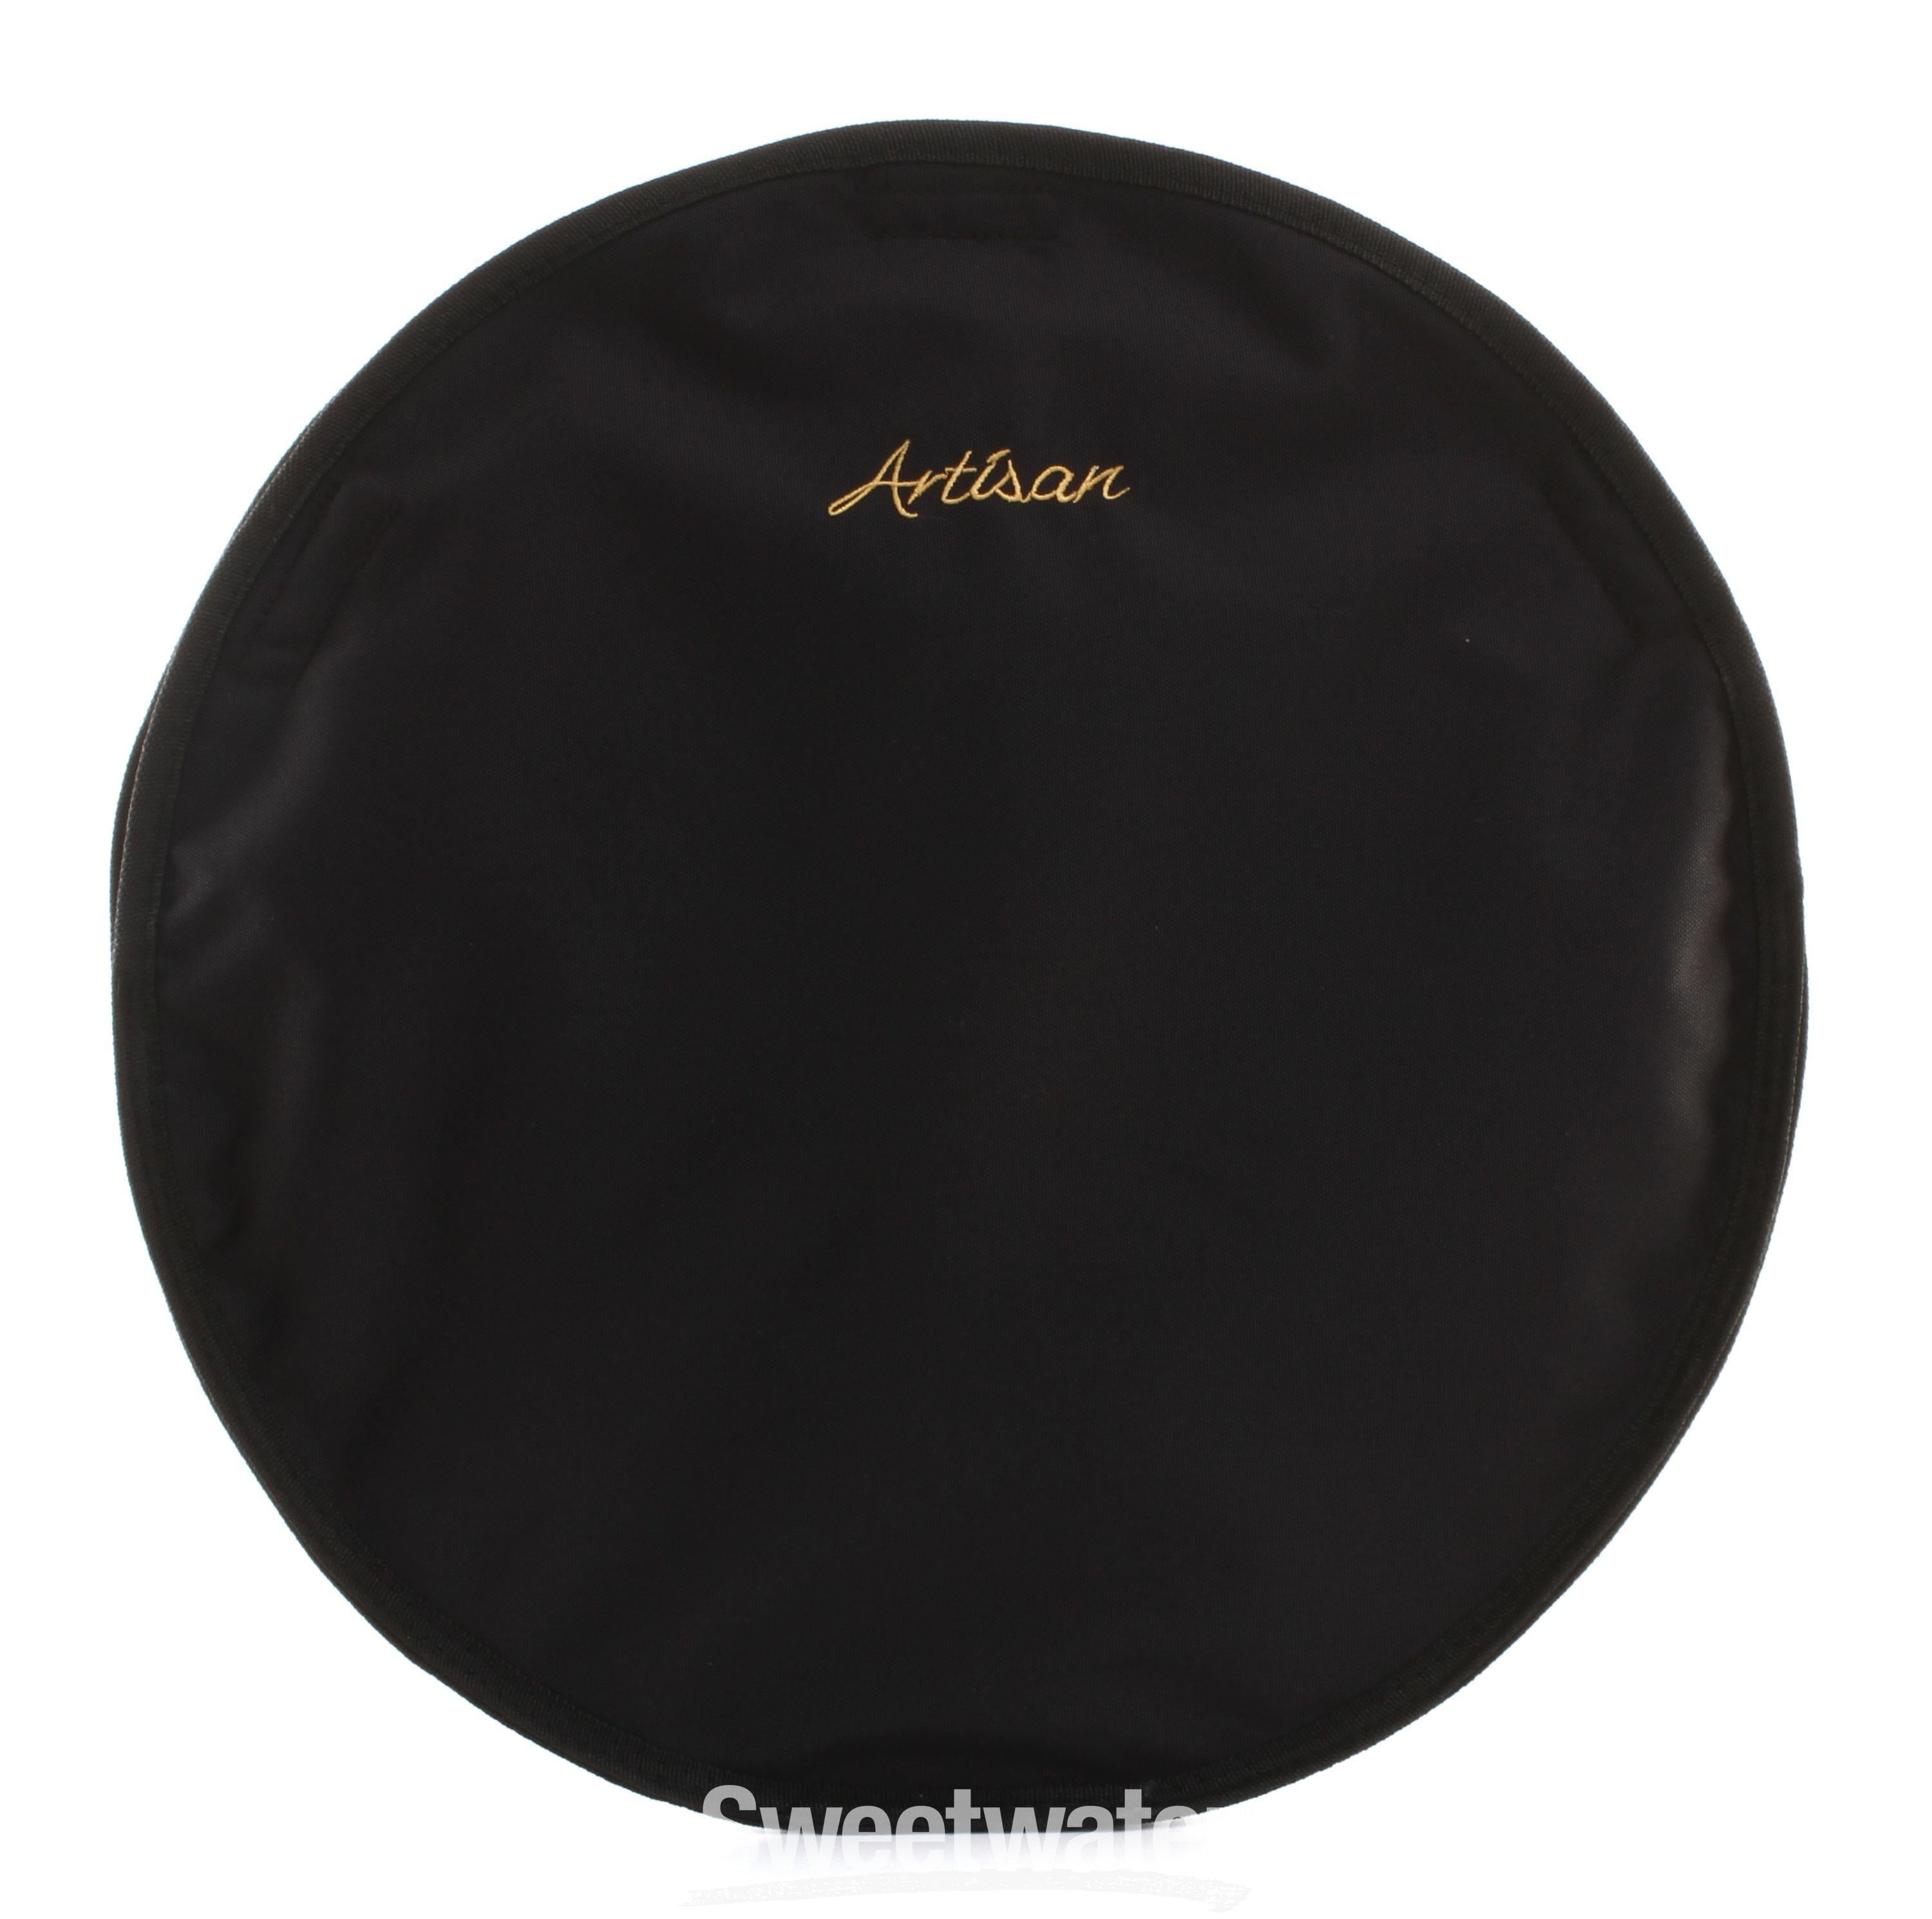 Sabian 15 inch Artisan Hi-hat Cymbals | Sweetwater